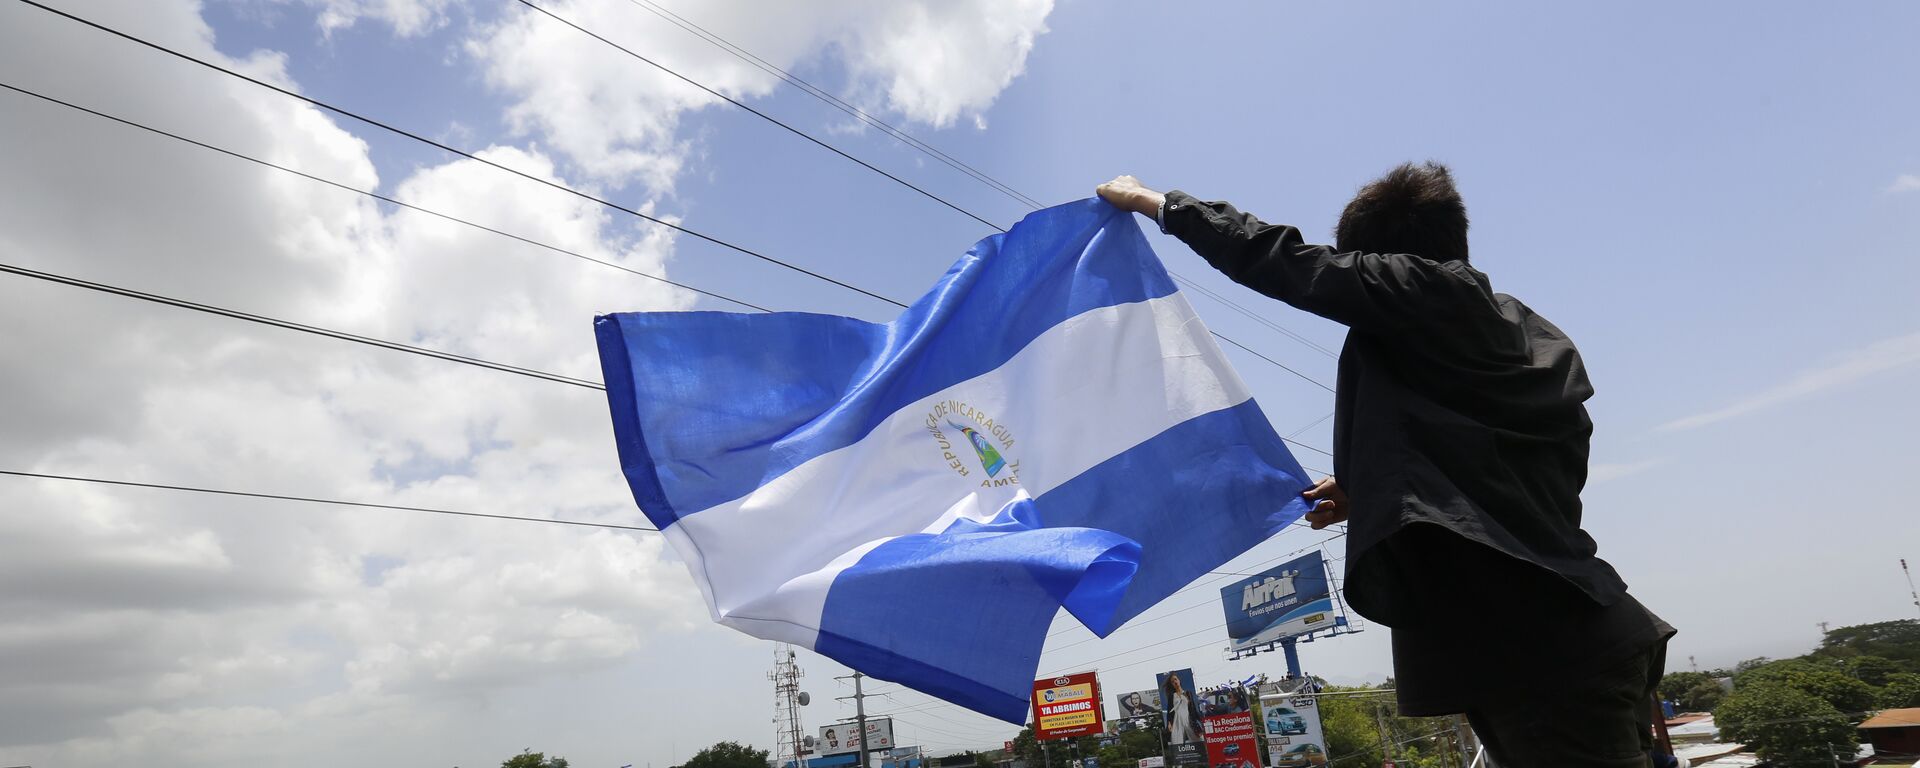 A man waves a Nicaraguan flag as people participate in a demonstration - Sputnik International, 1920, 05.08.2020